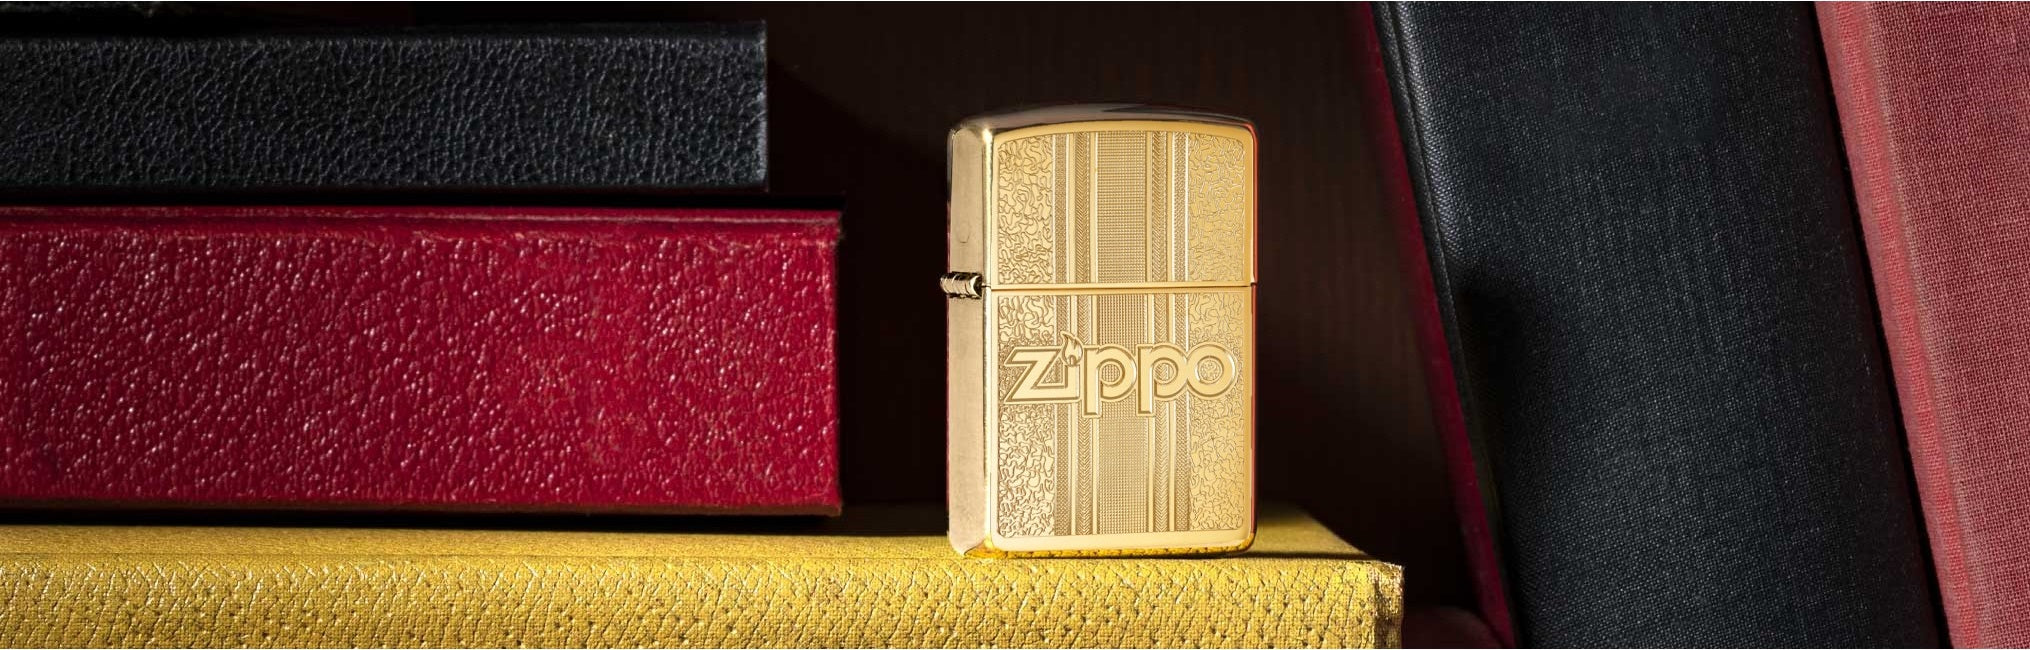 Accendino Zippo Simple Spade Design - Tabaccheria d'Amora